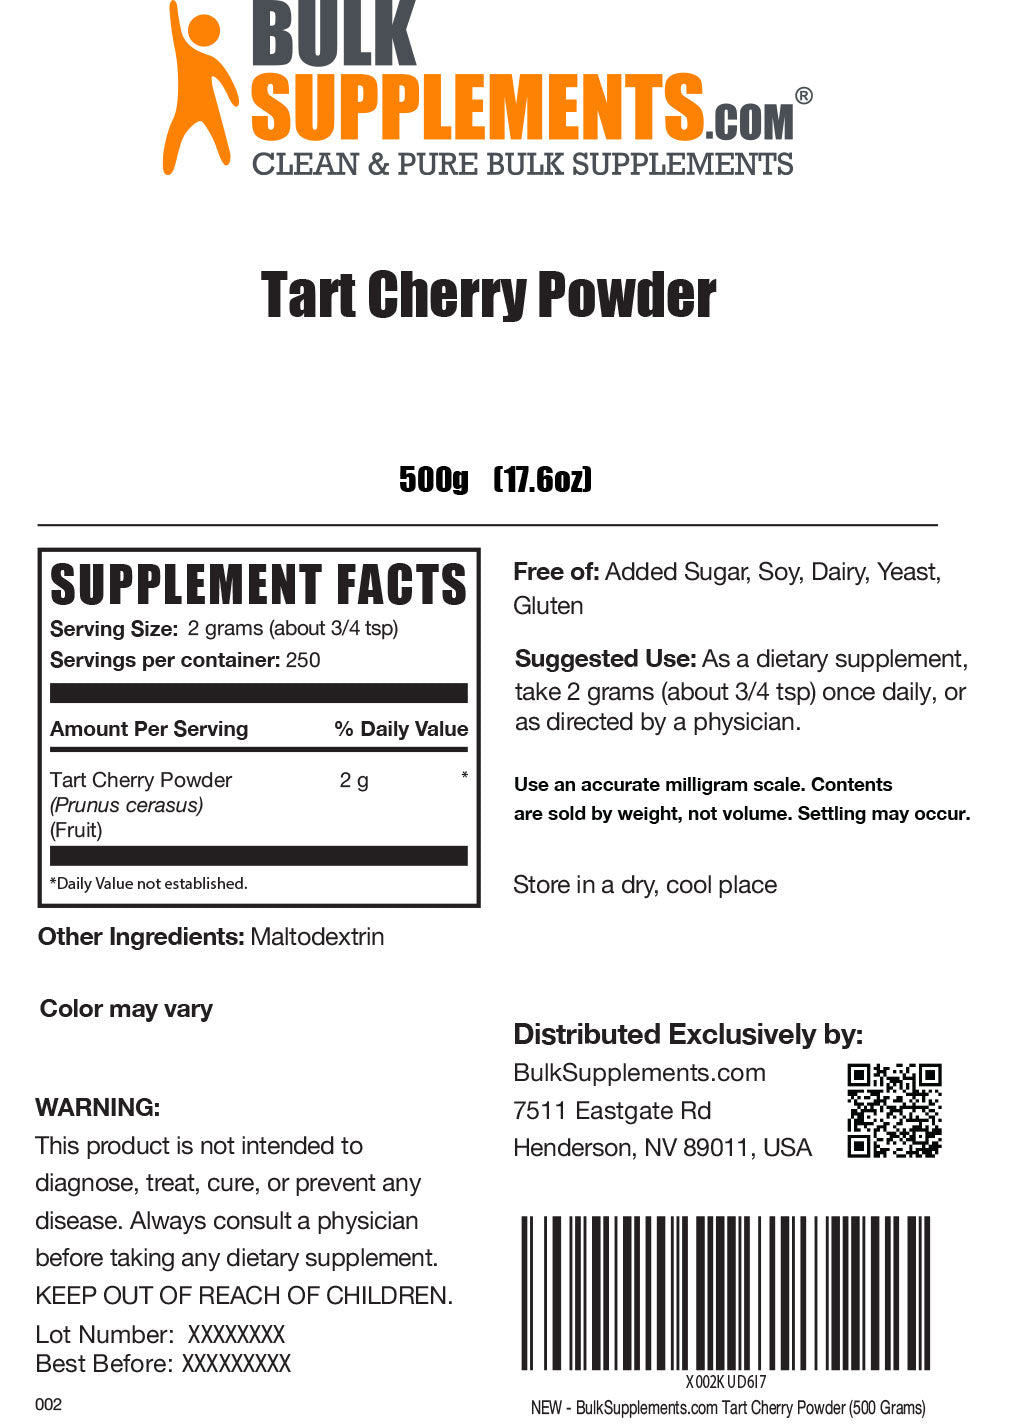 Tart Cherry powder label 500g